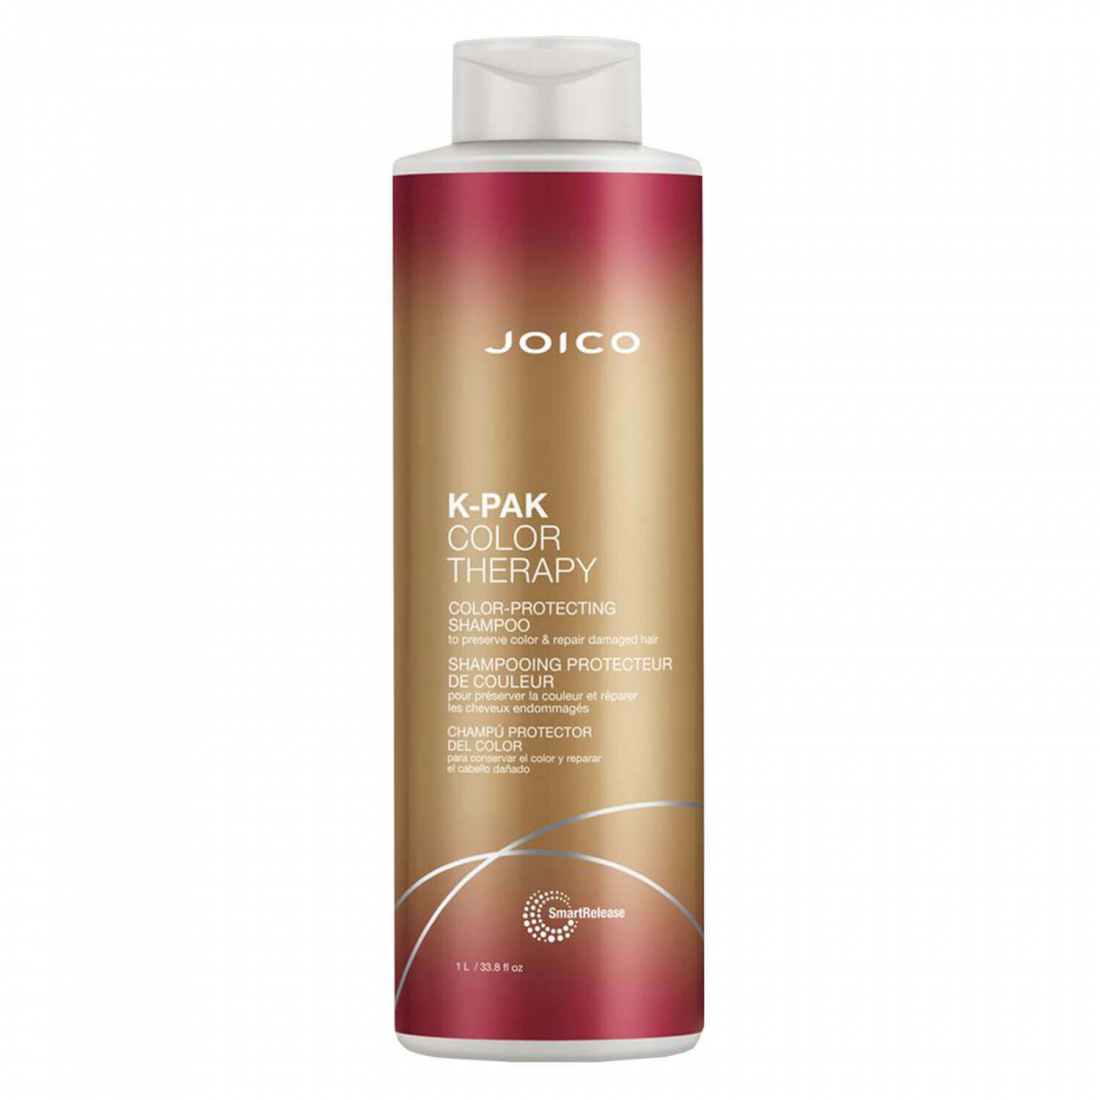 'K-PAK Color Therapy' Shampoo - 1000 ml